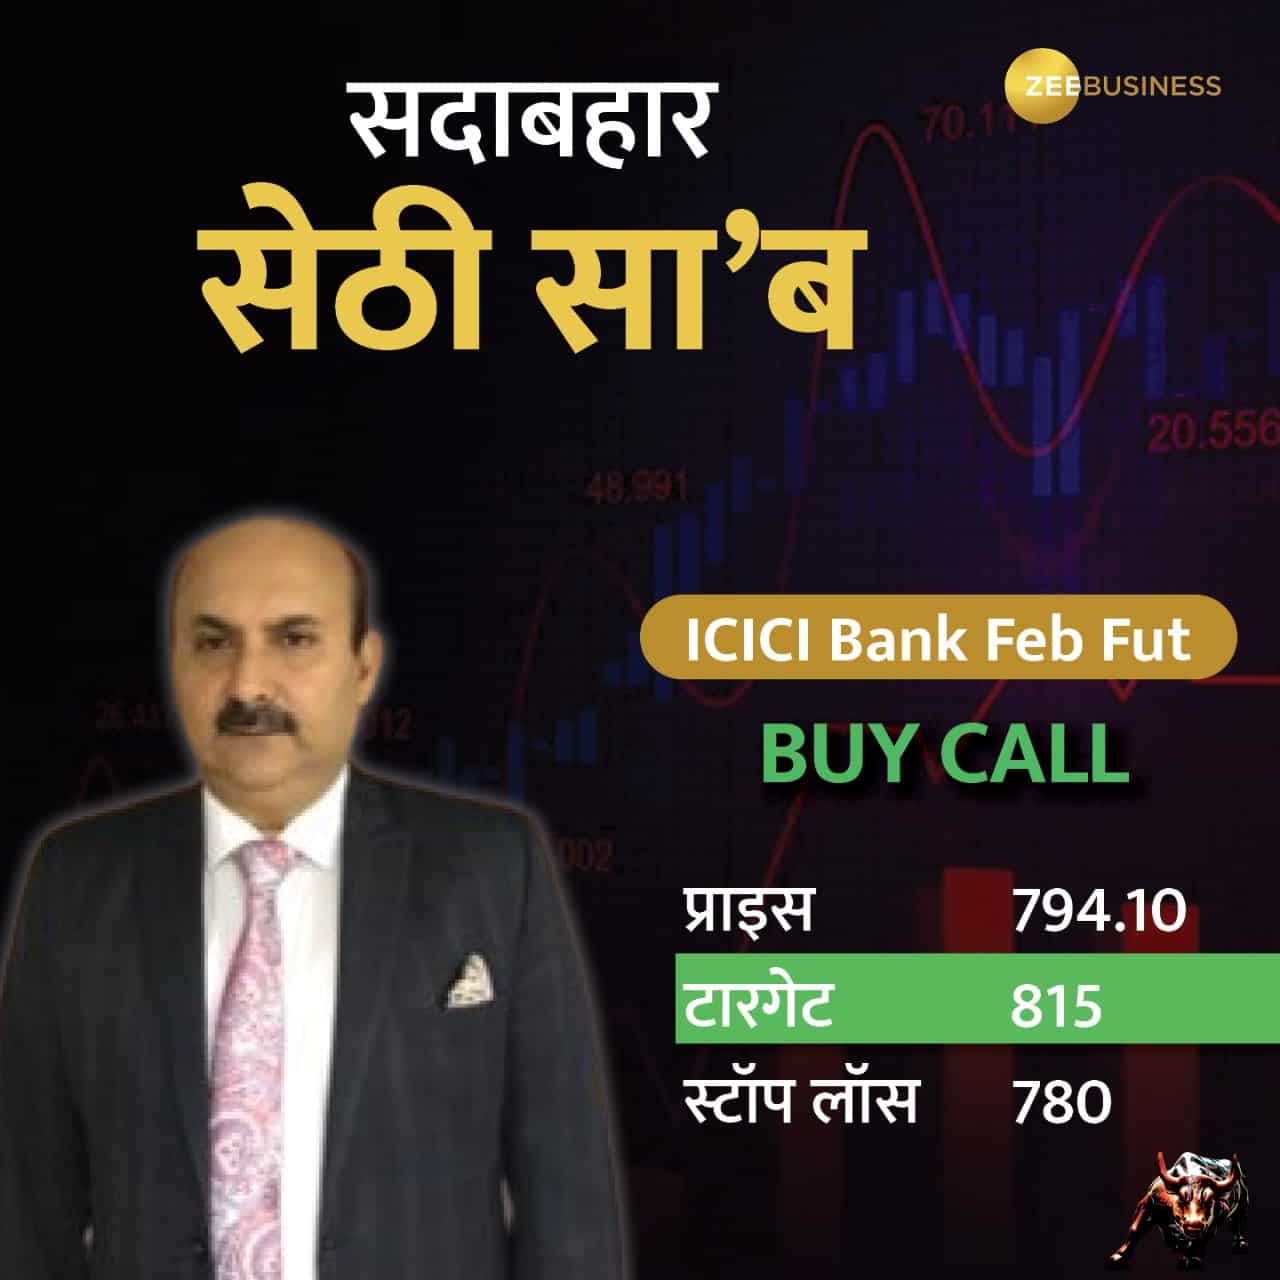 ICICI Bank Feb Fut